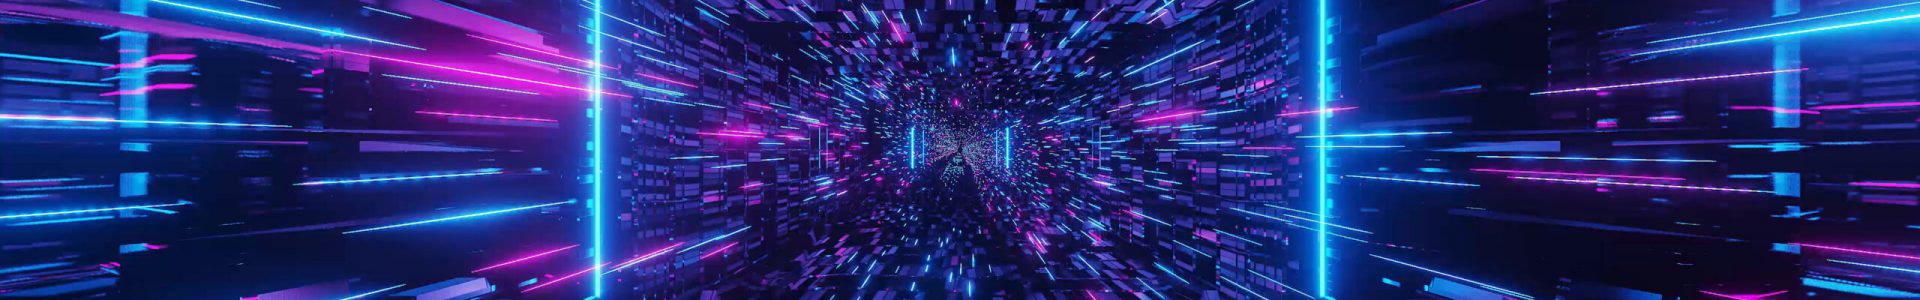 A 3D illustration of blue and purple futuristic sci-fi techno lights-cool background